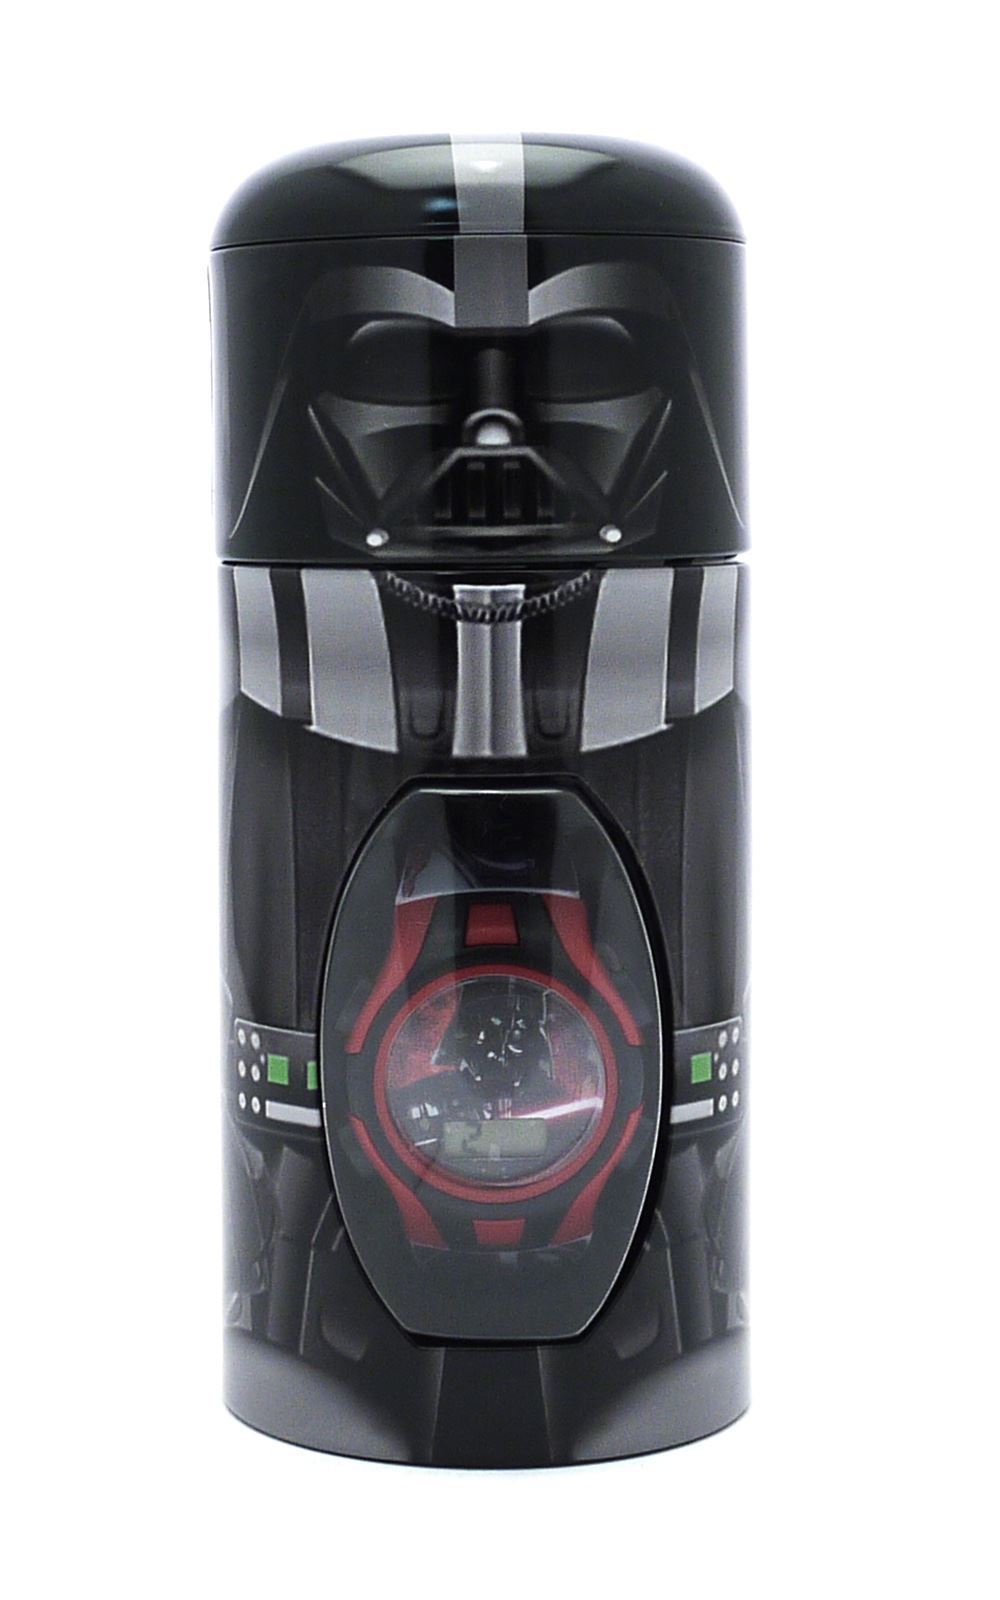 Disney Star Wars 'Darth Vader' Digital Gift Metal Tin Wrist Watch